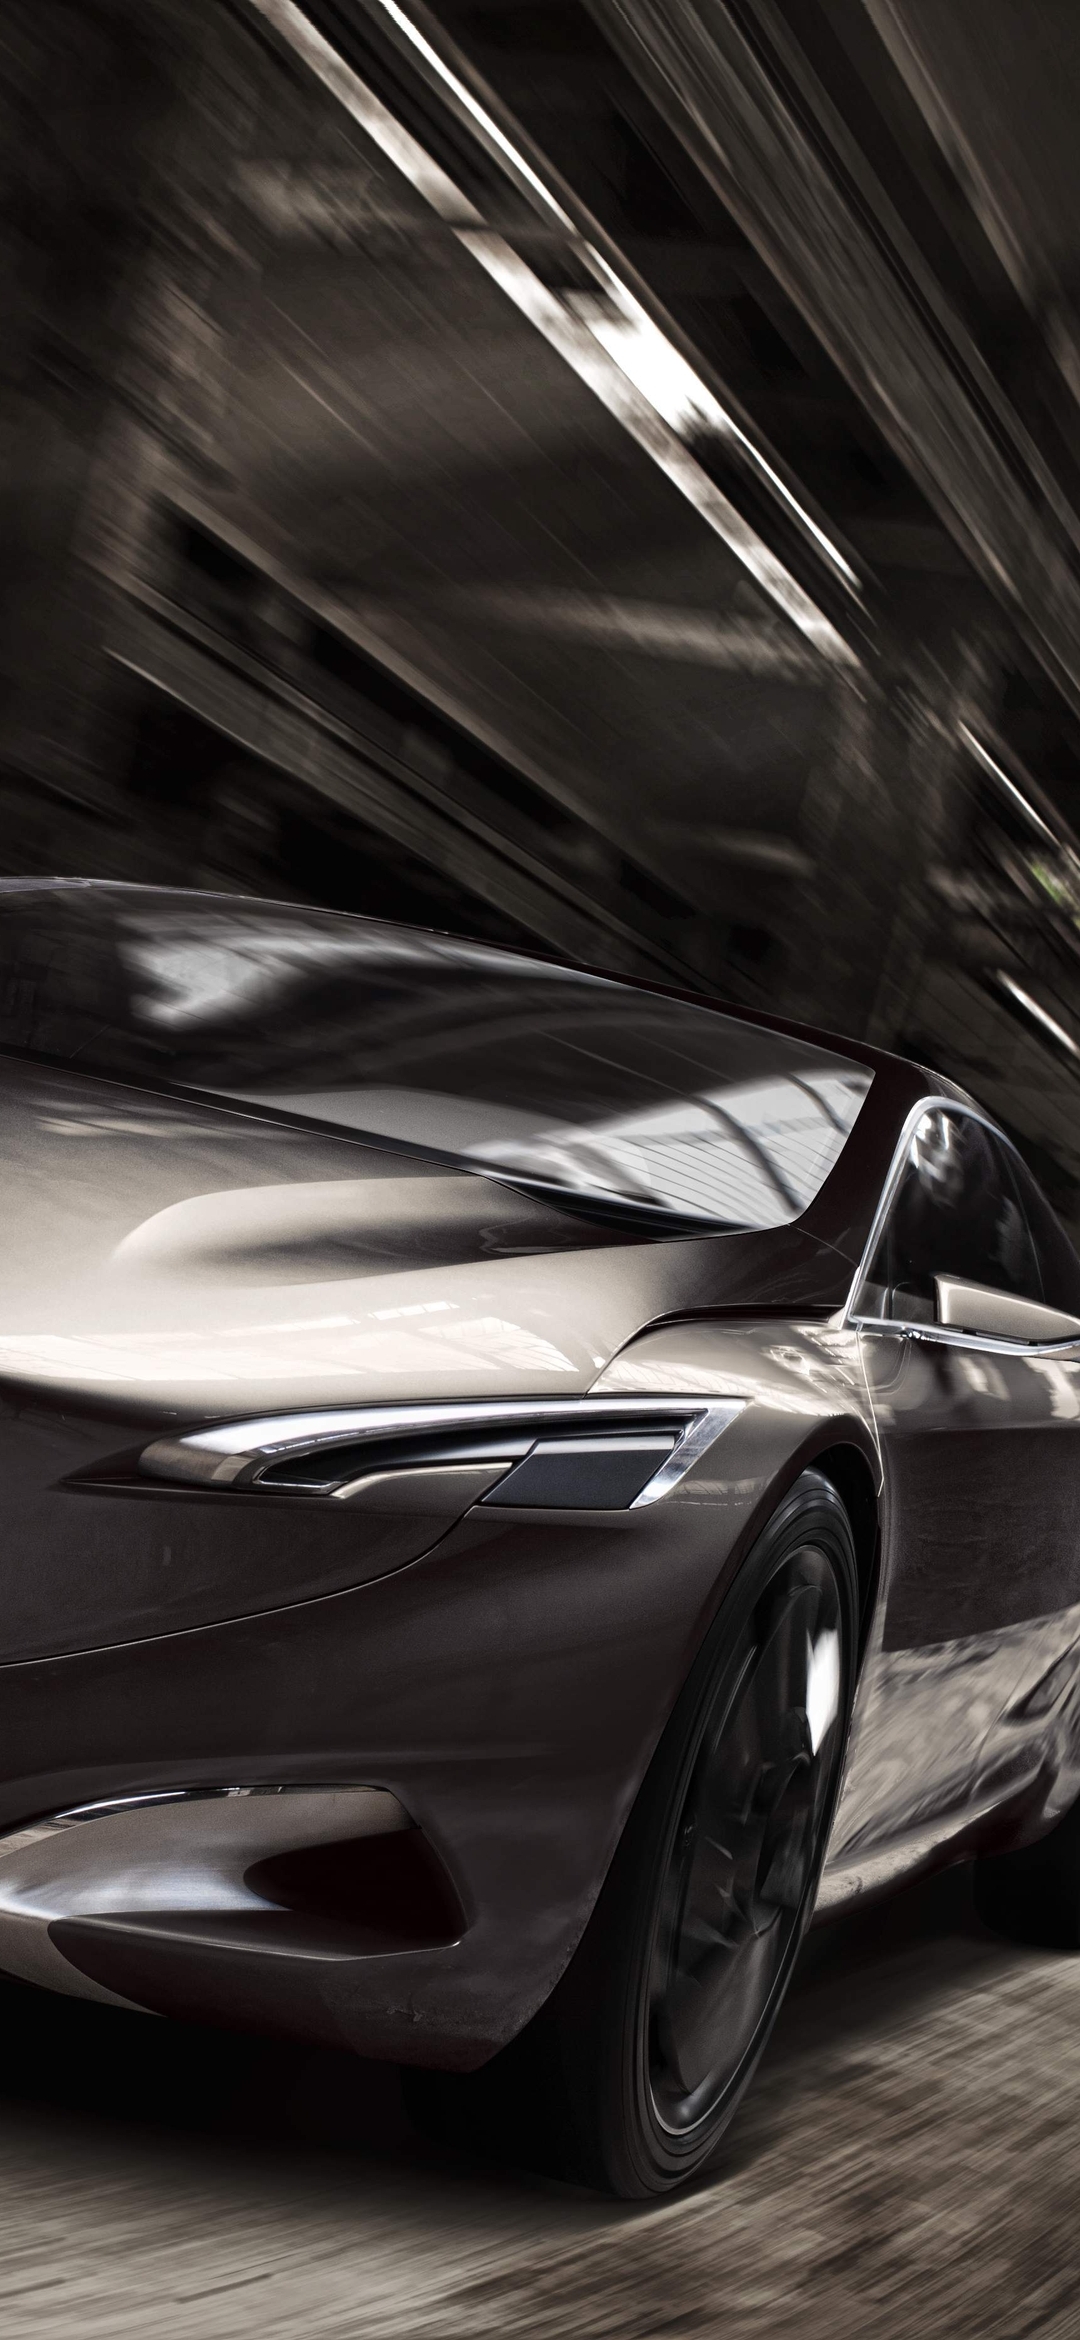 Image: Car, Peugeot, HX1, lights, wheels, motion